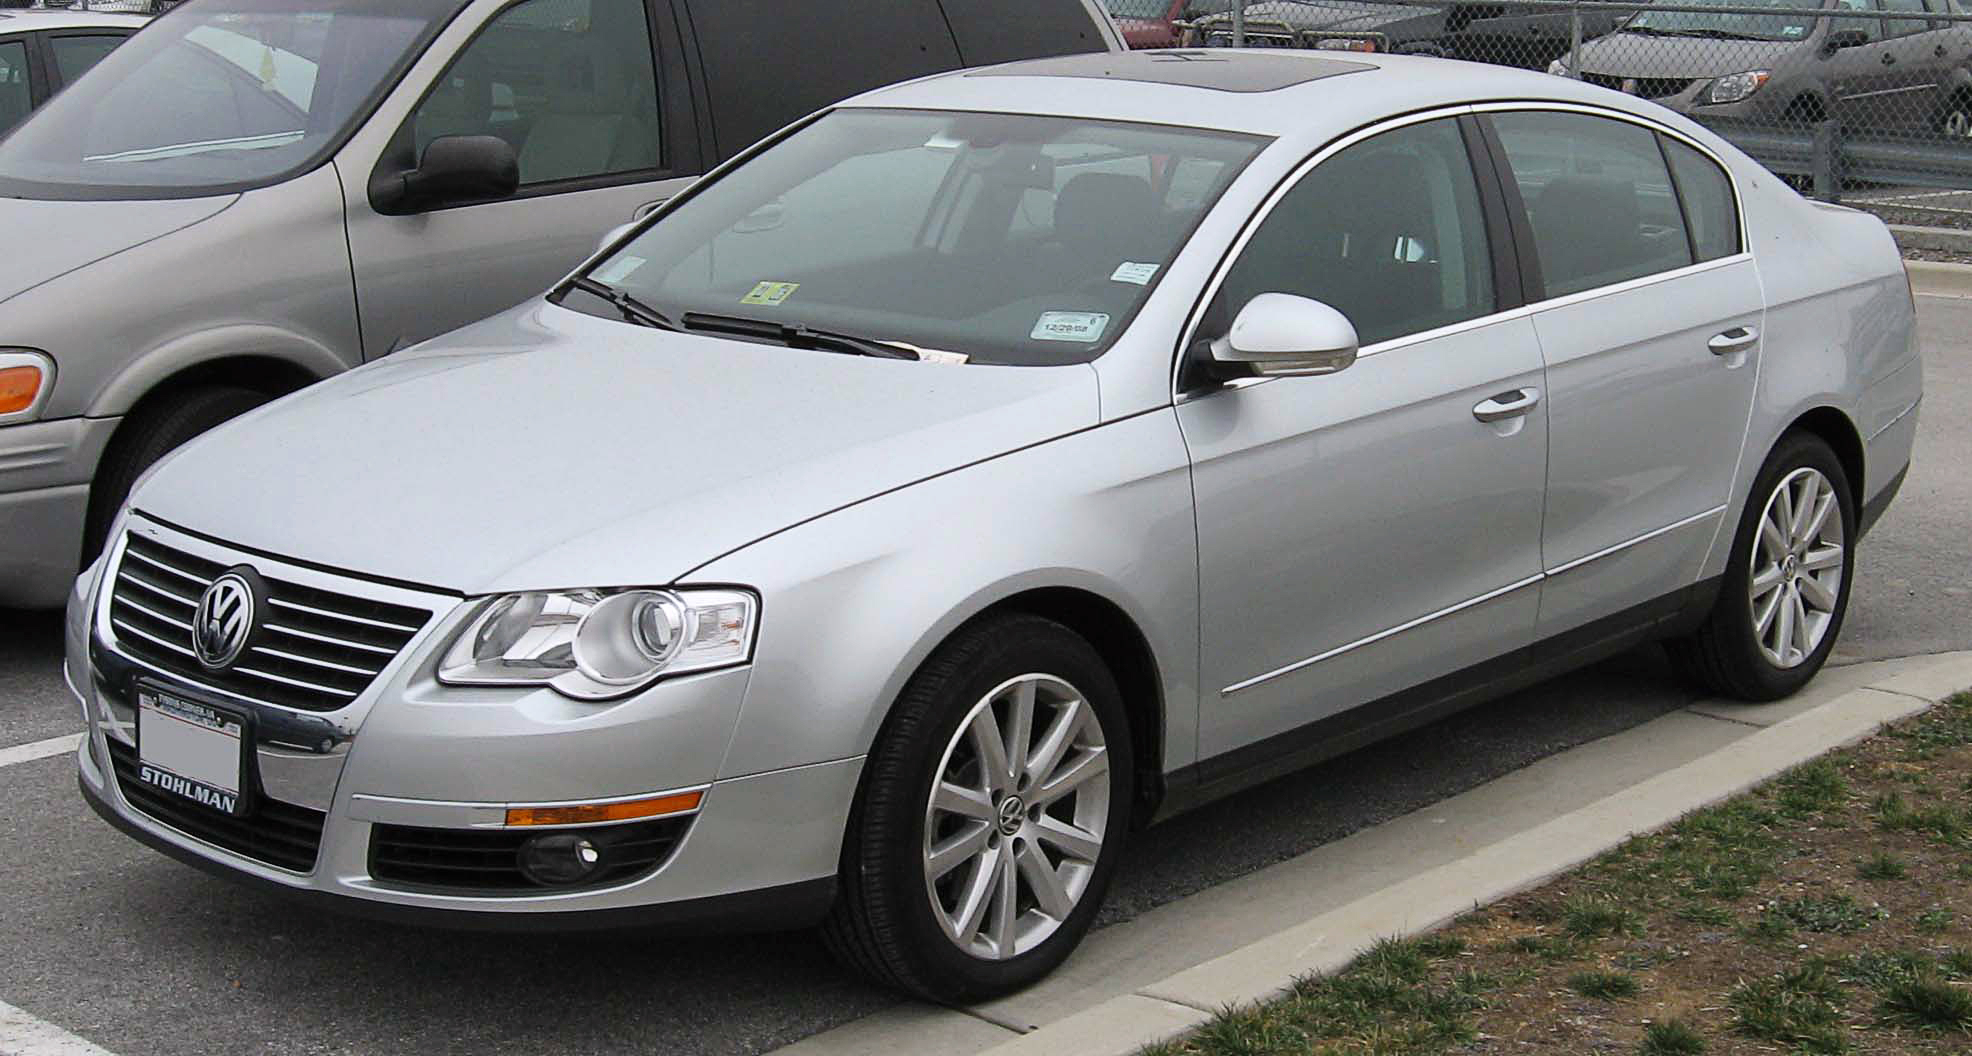 File:6th-Volkswagen-Passat.jpg - Wikimedia Commons